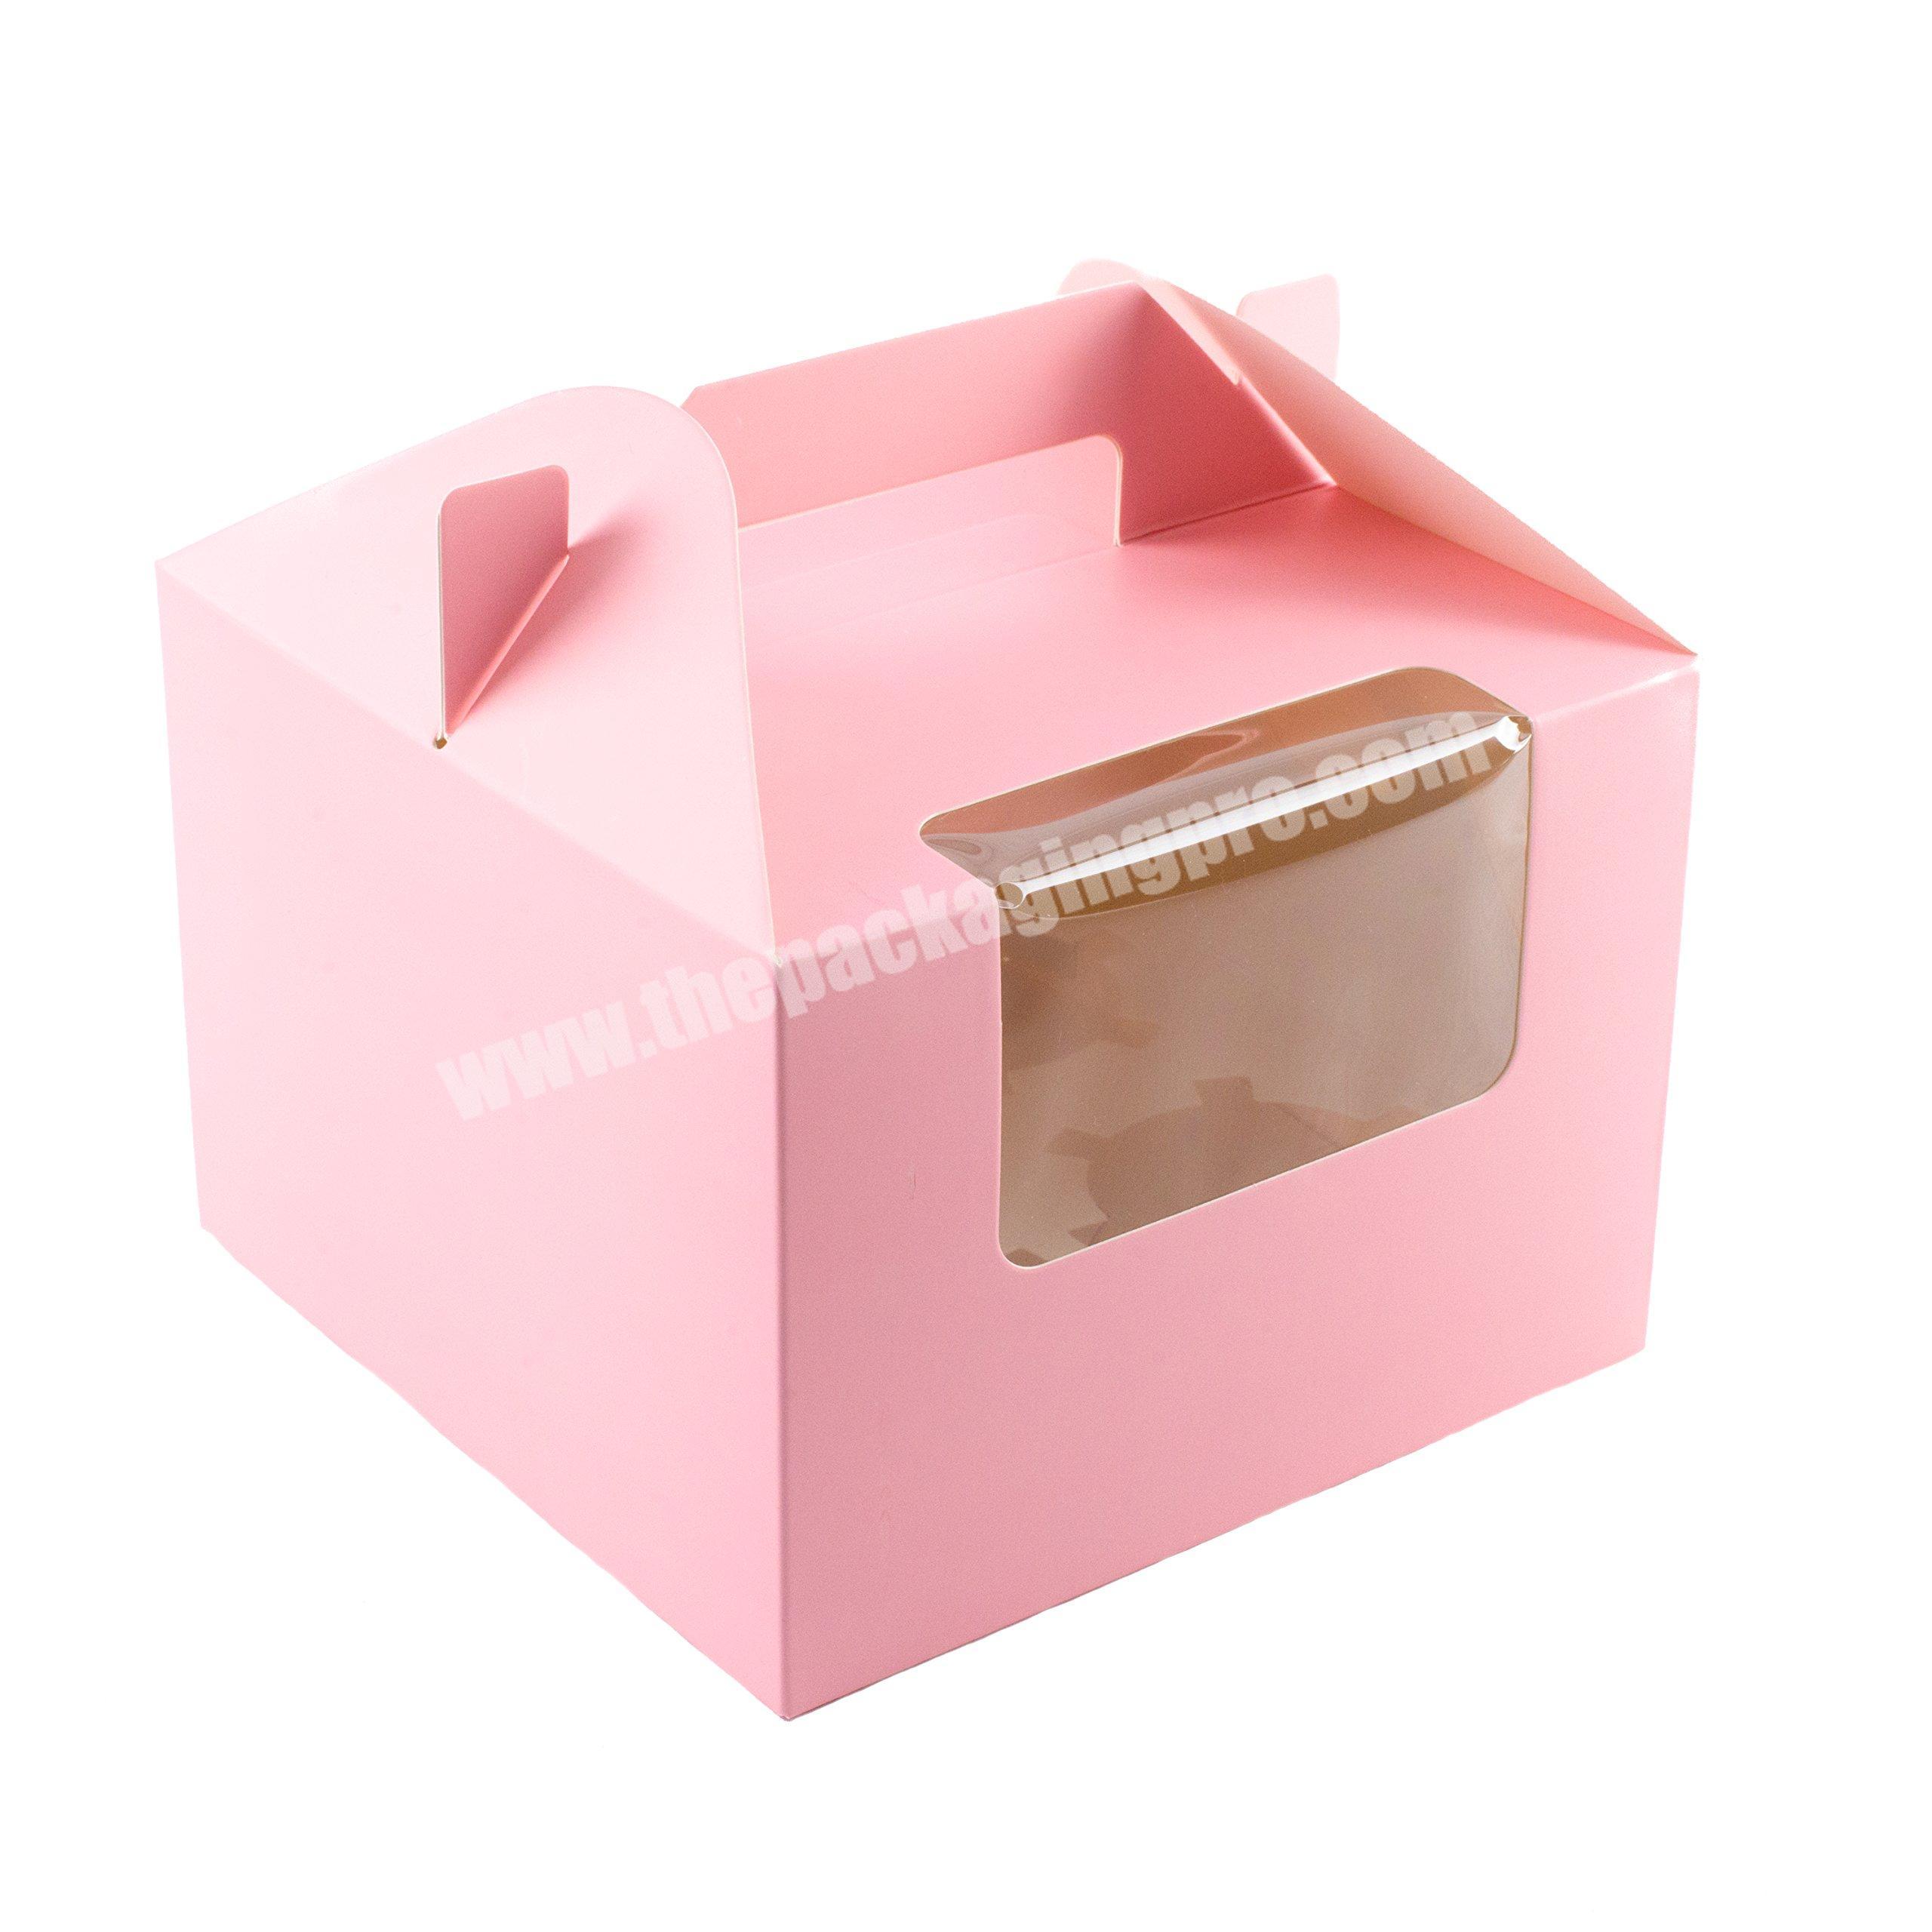 Bespoke cake package box wholesale square cake box pink customized small cake box with handle